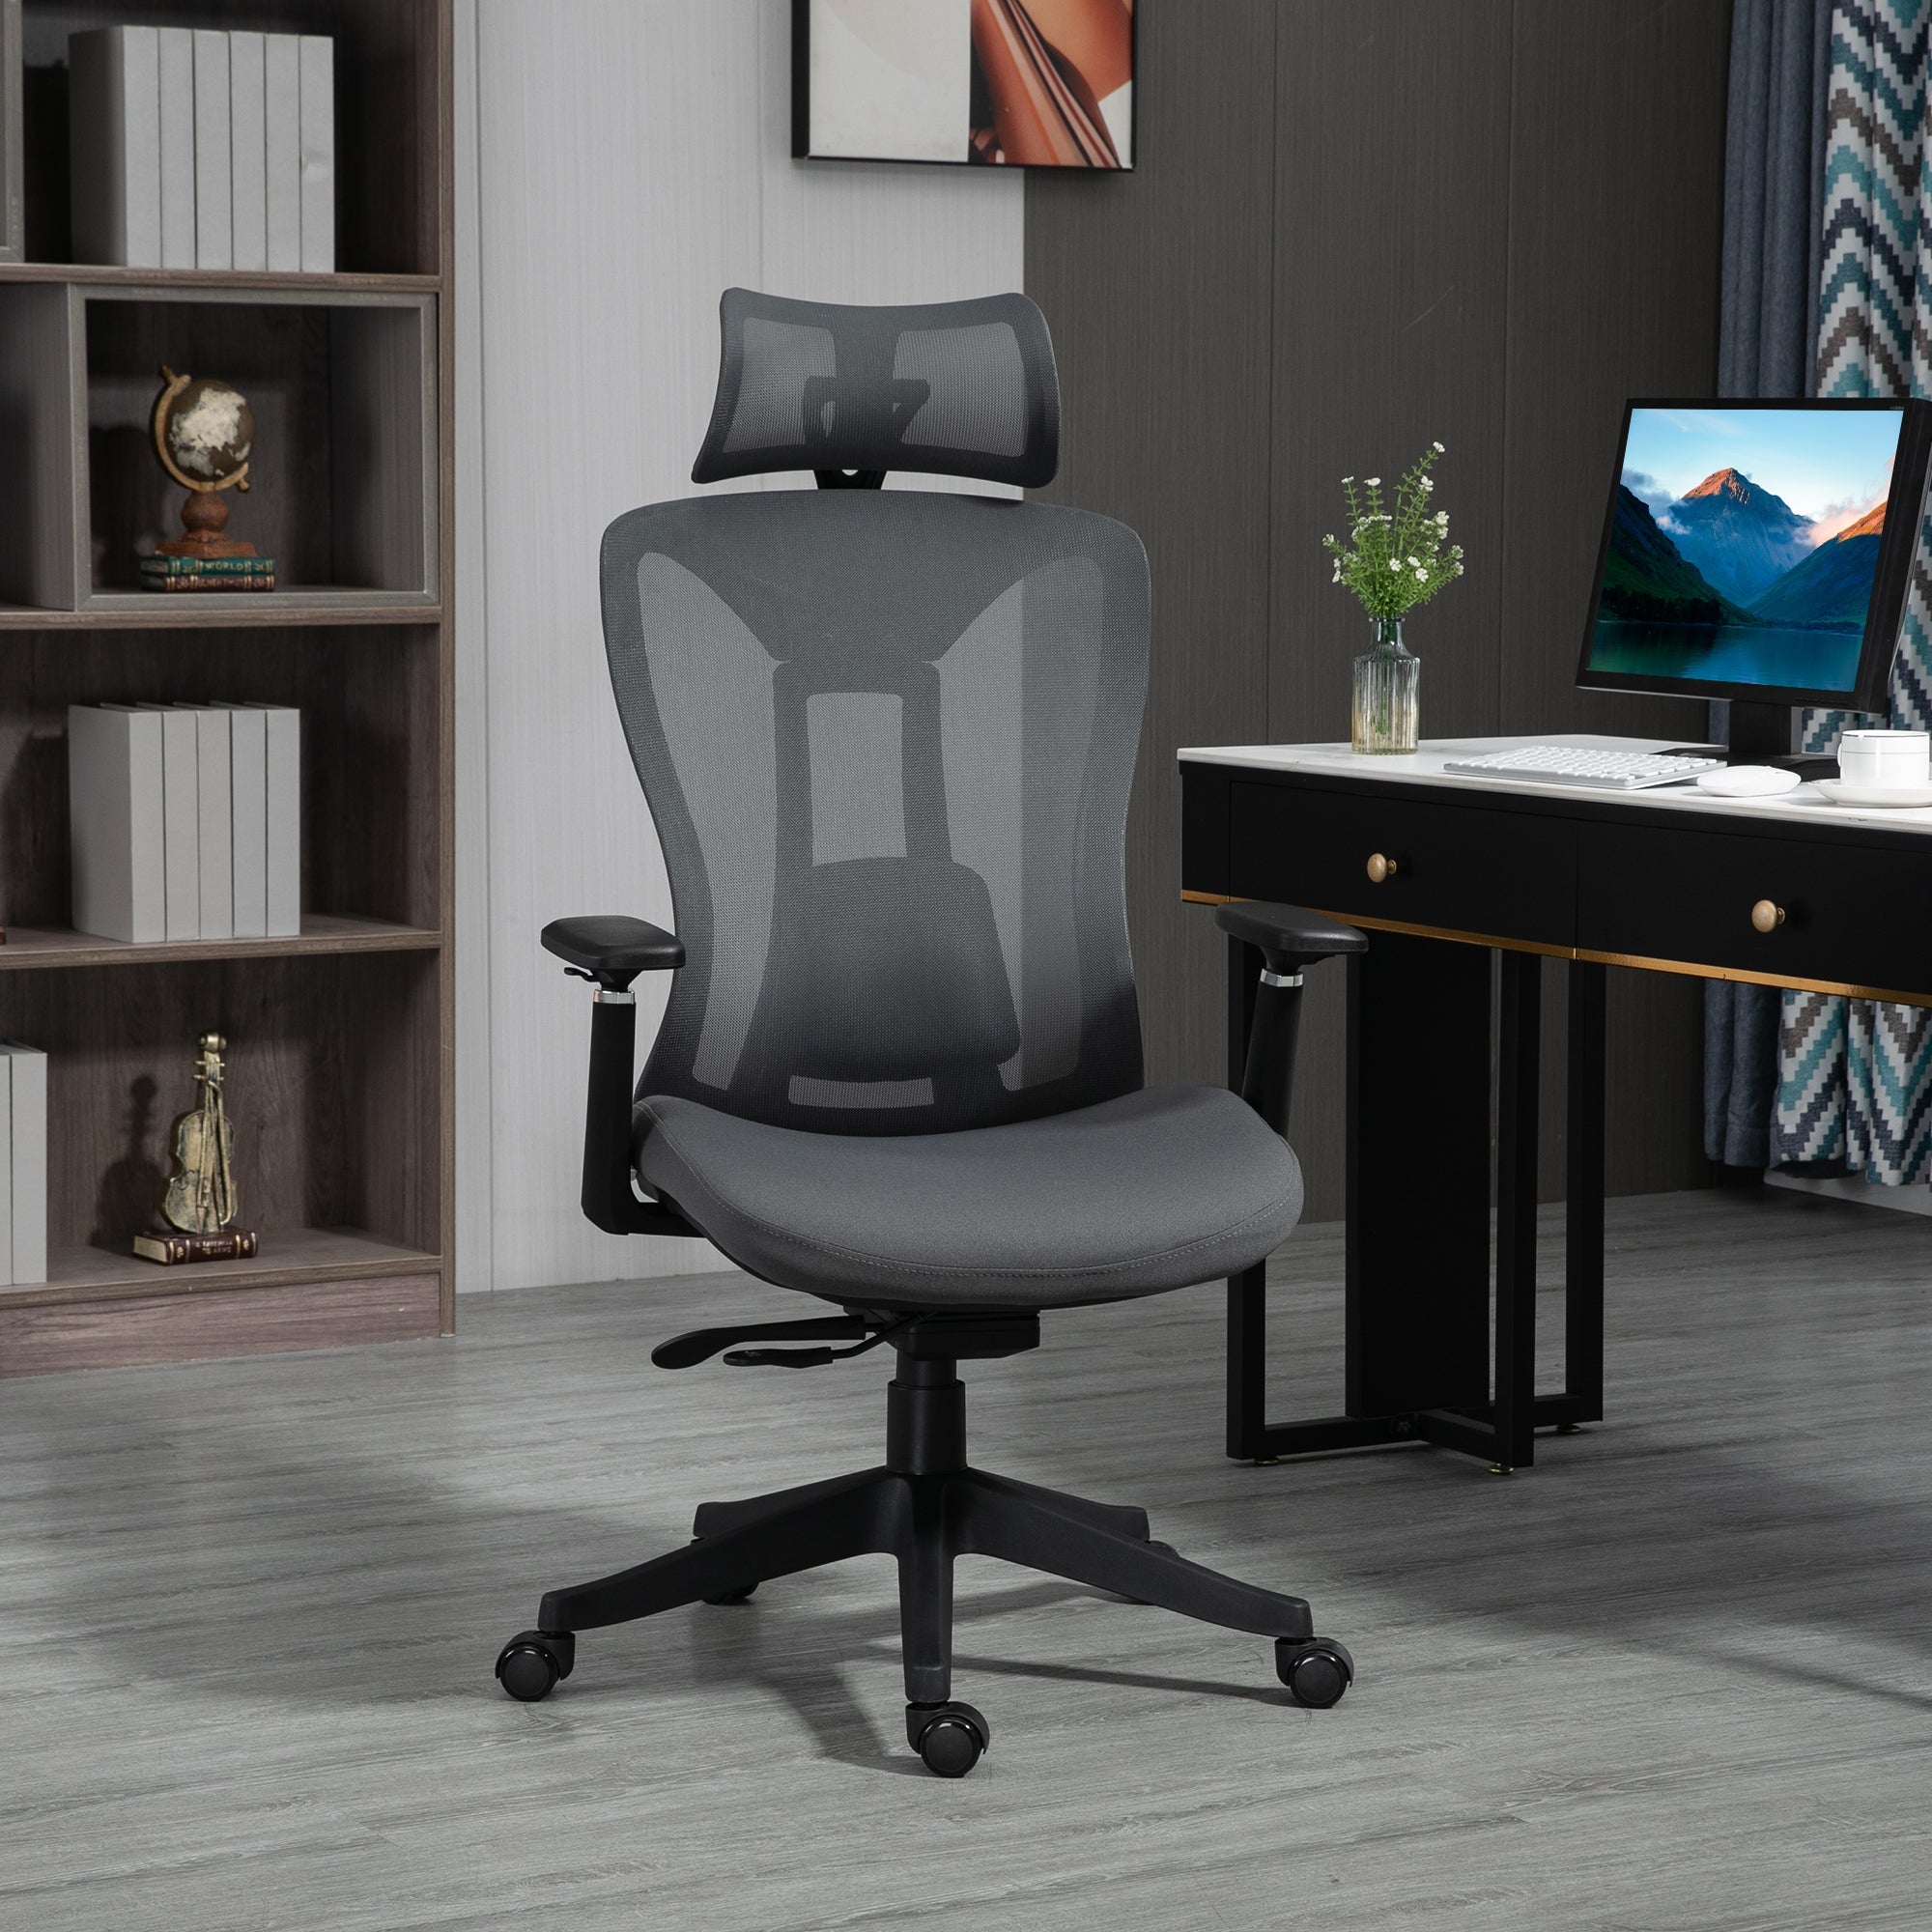 Mesh Office Chair, Reclining Desk Chair with Adjustable Headrest, Lumbar Support, 3D Armrest, Sliding Seat, Swivel Wheels, Grey-1